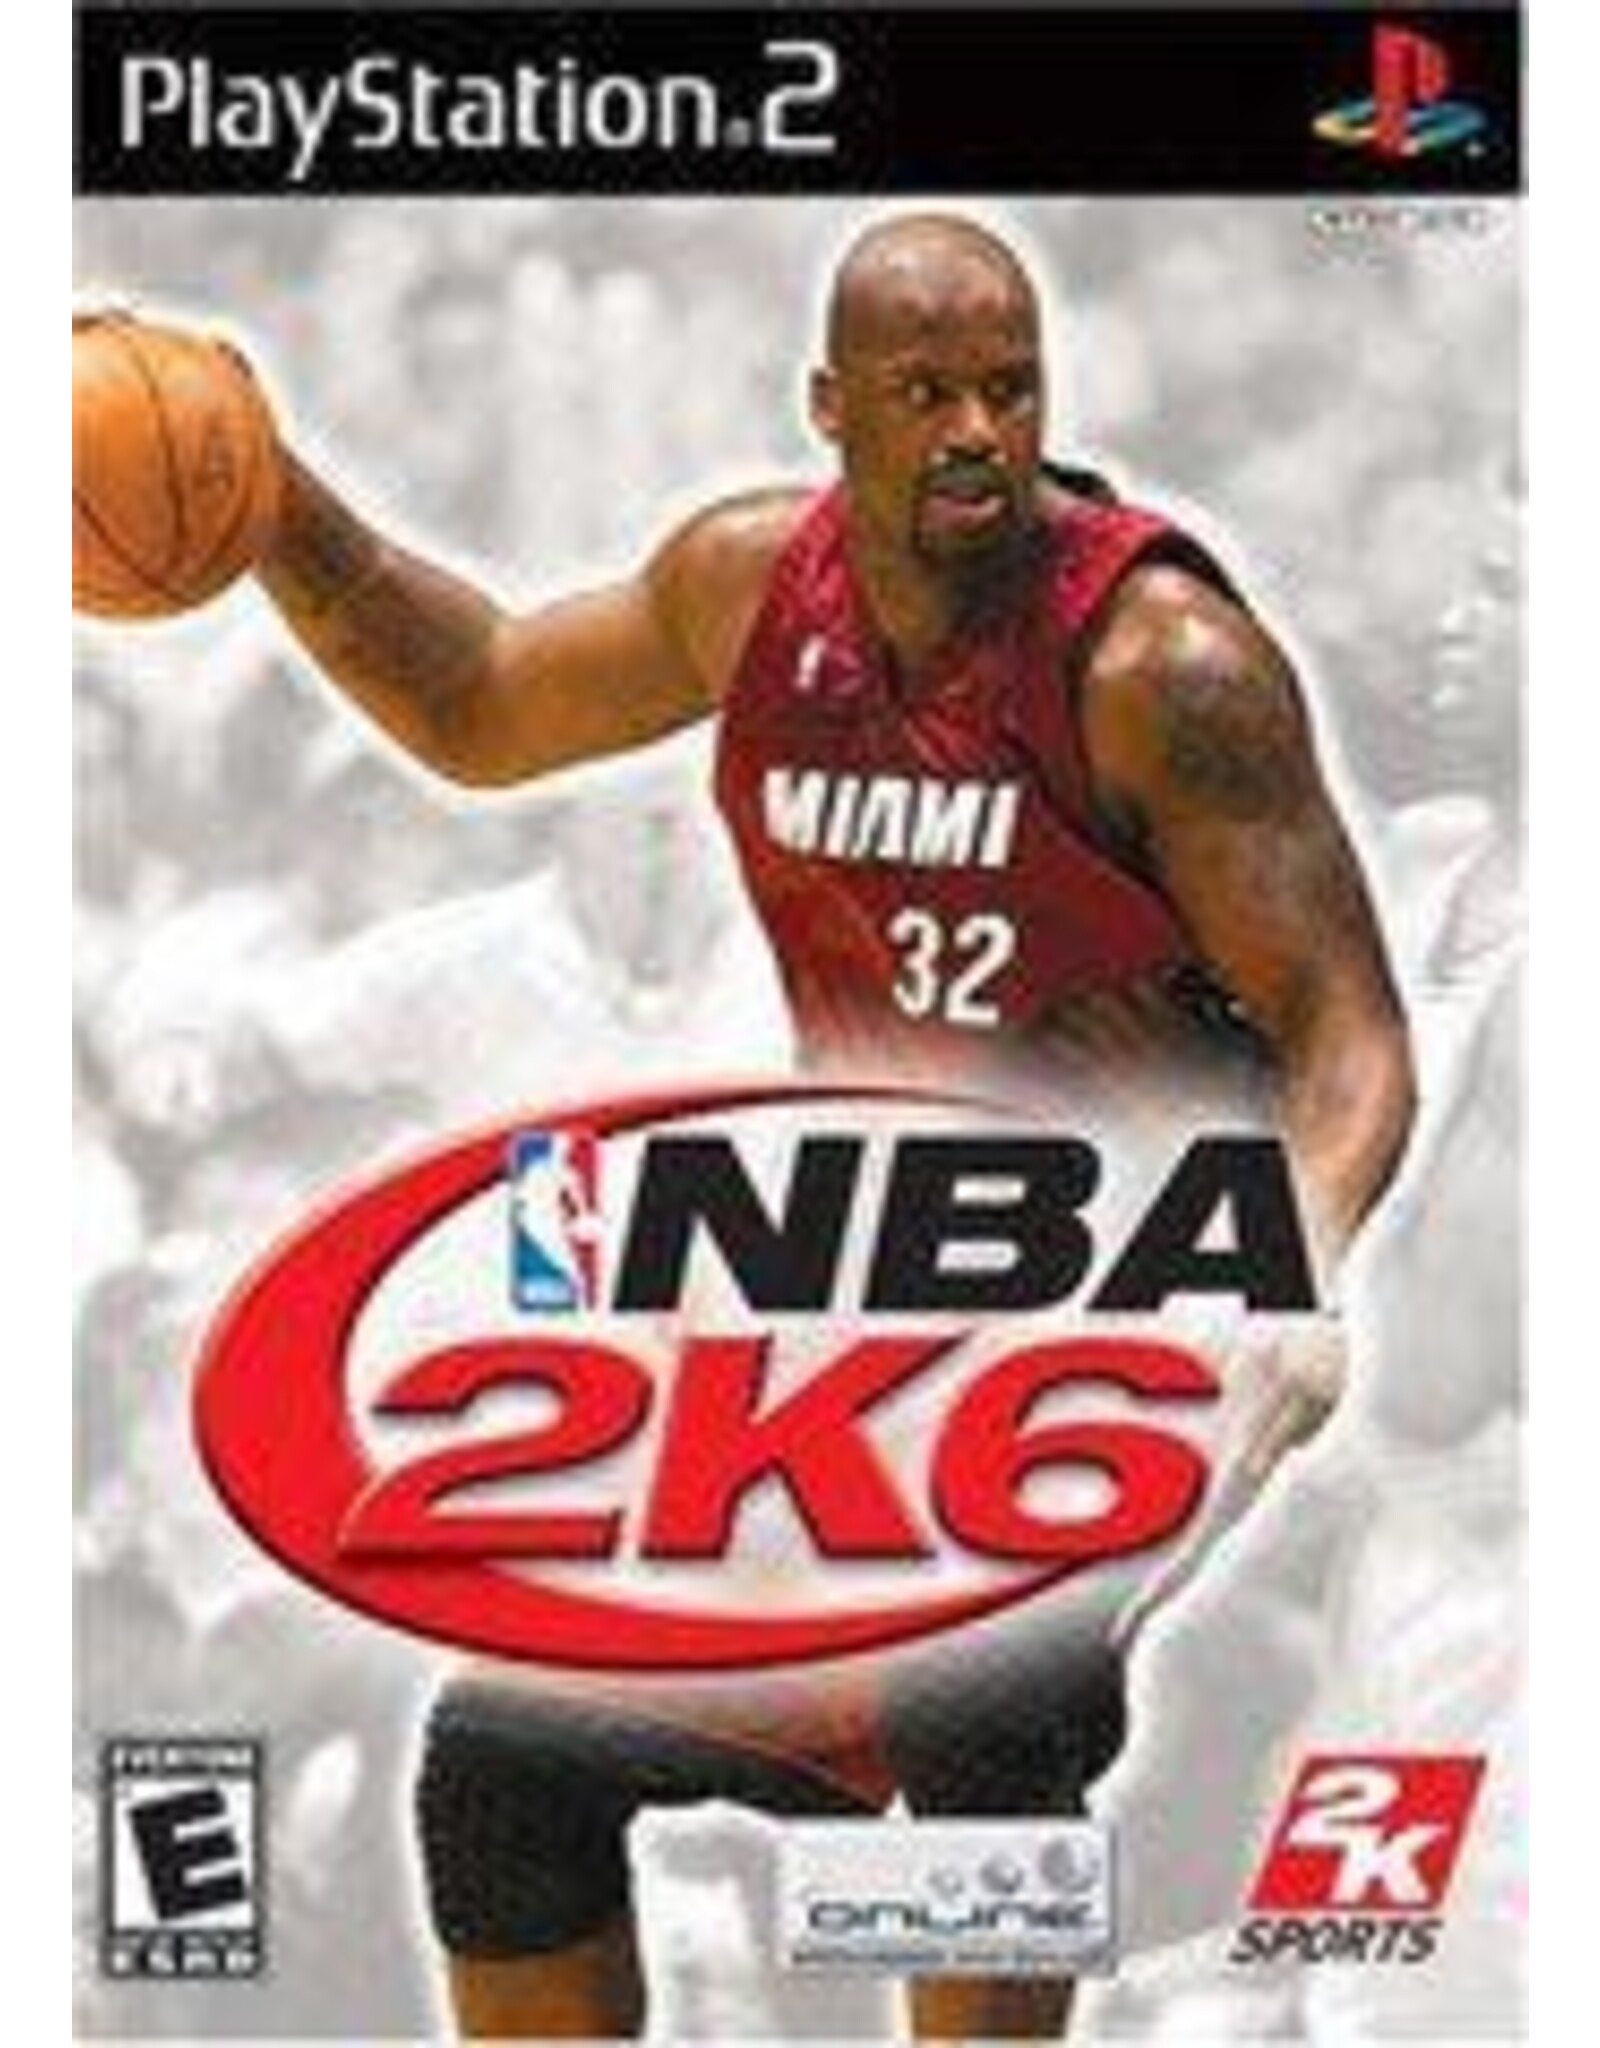 Playstation 2 NBA 2K6 (CiB)